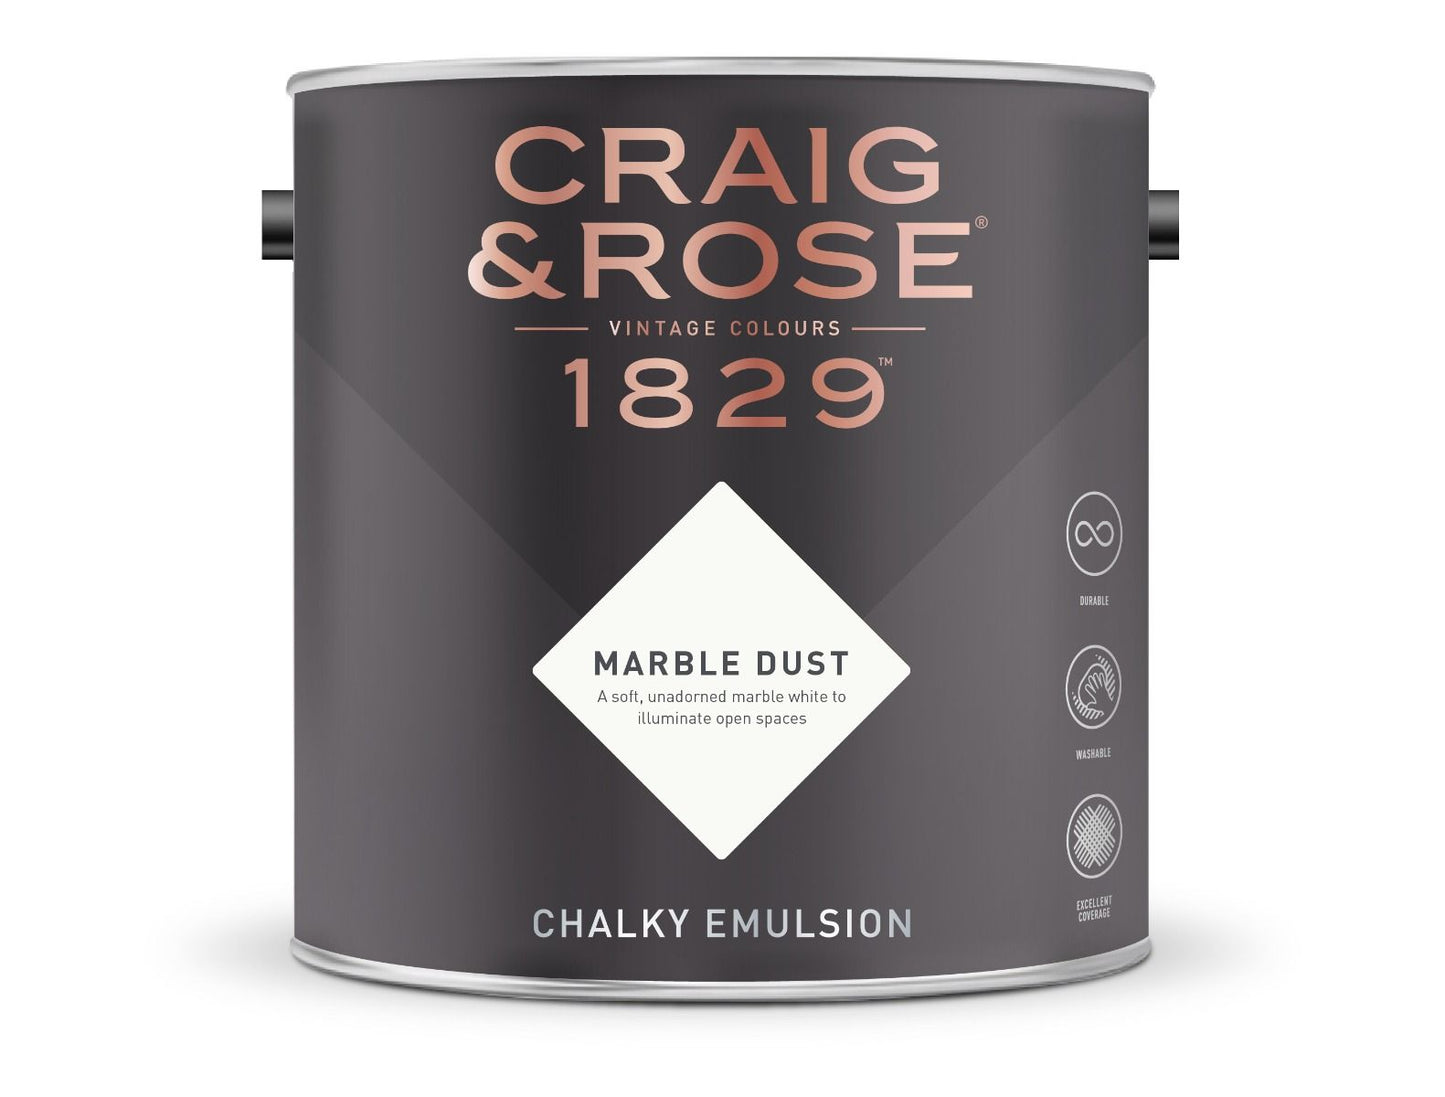 Craig & Rose 1829 Marble Dust